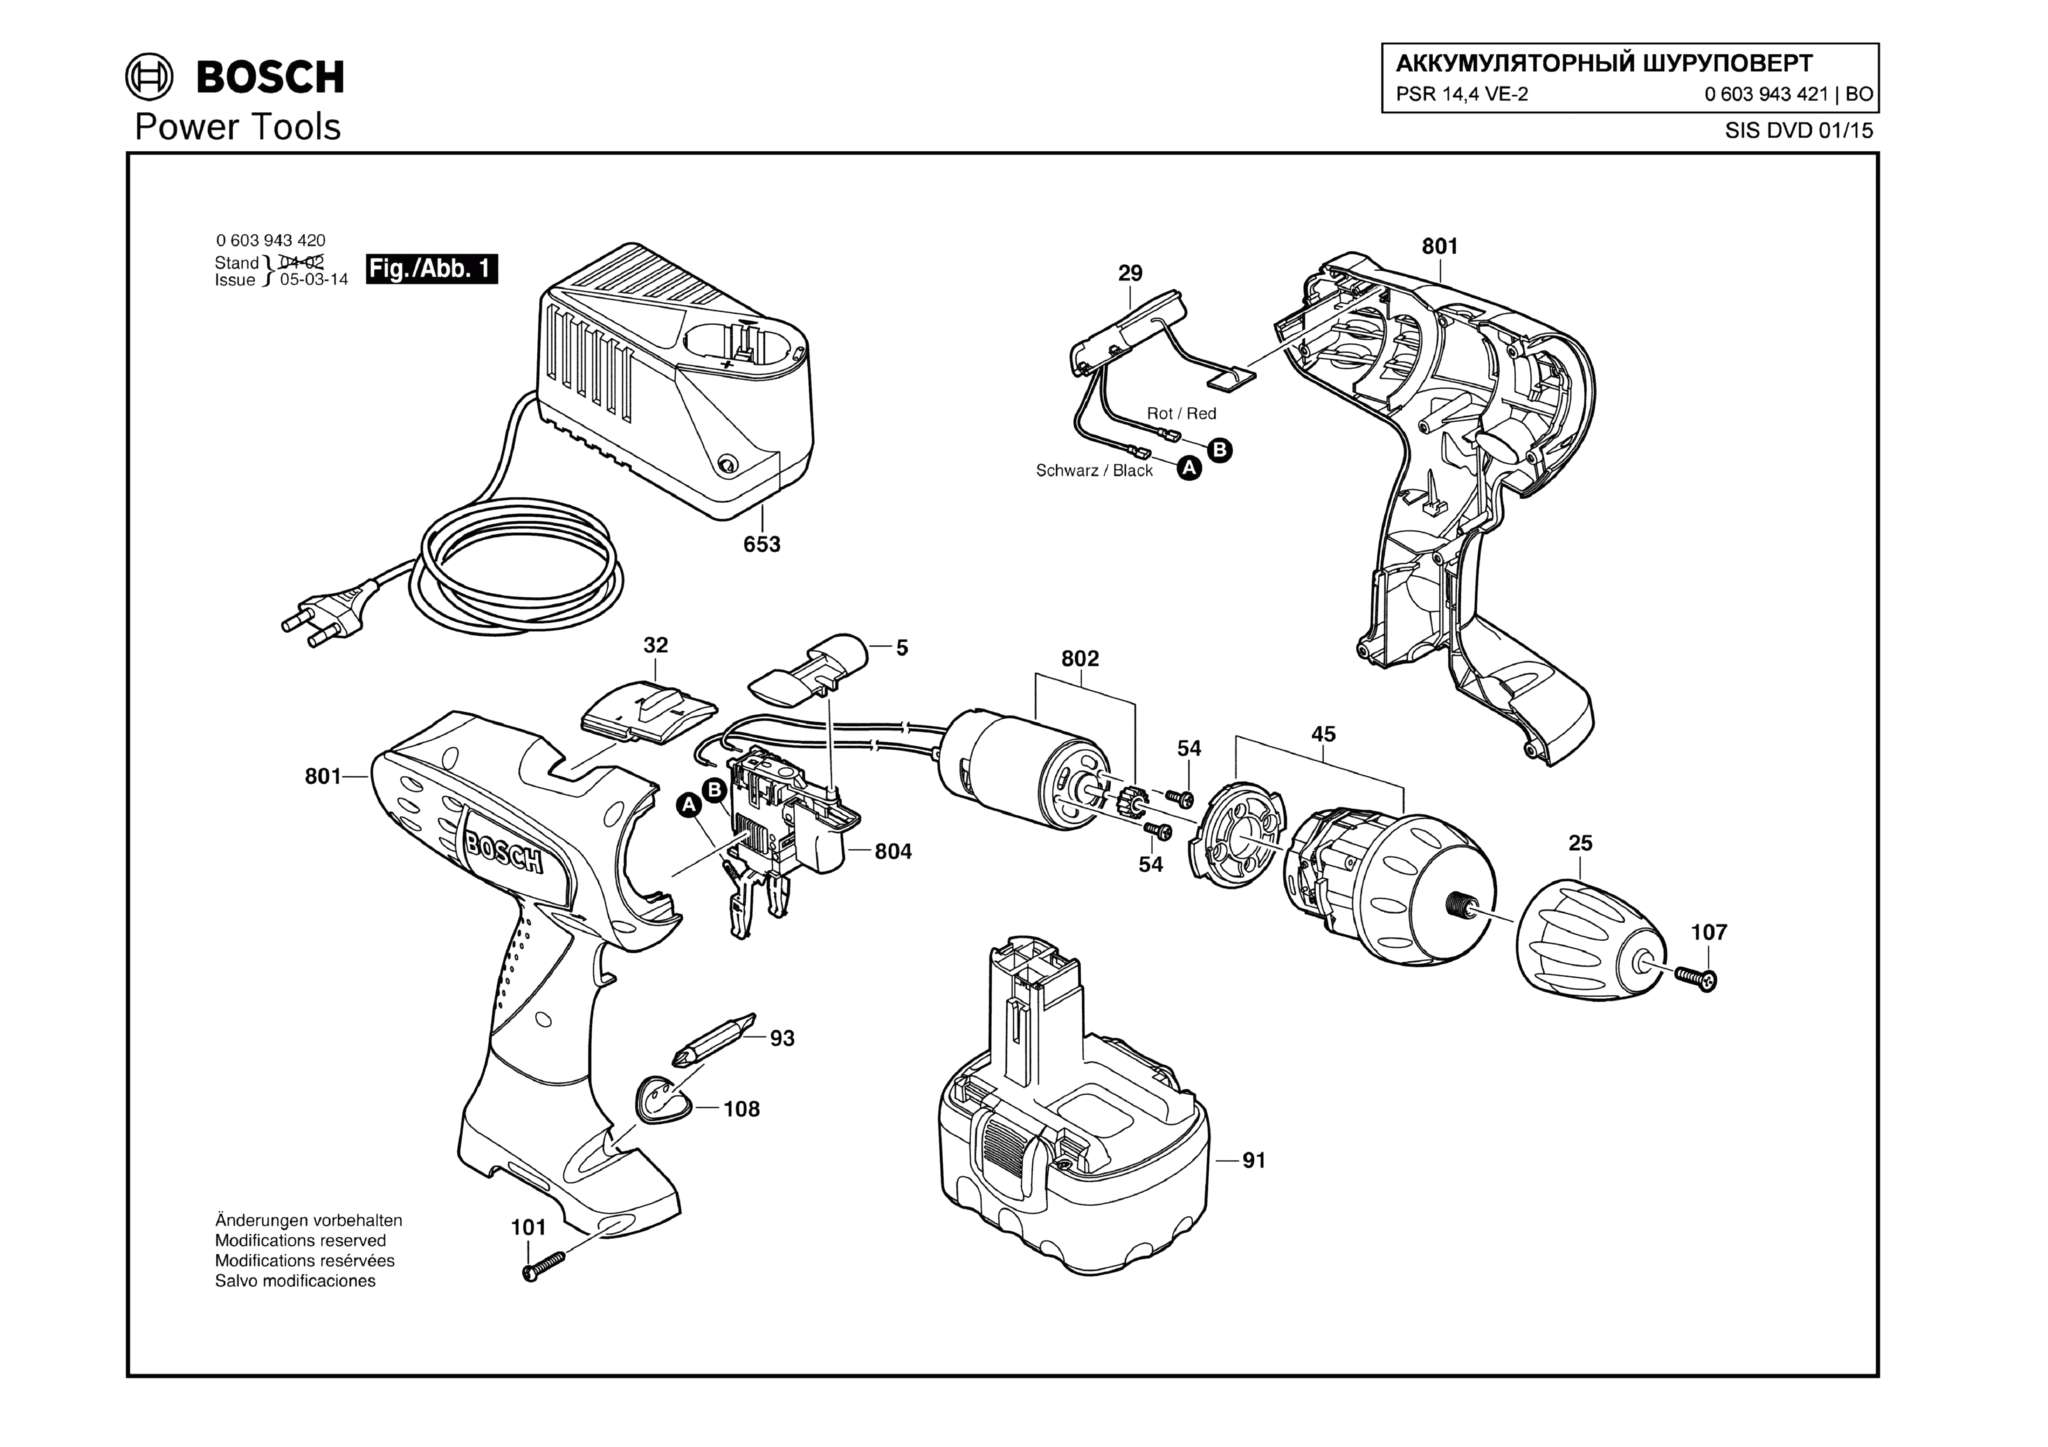 Запчасти, схема и деталировка Bosch PSR 14,4 VE-2 (ТИП 0603943421)